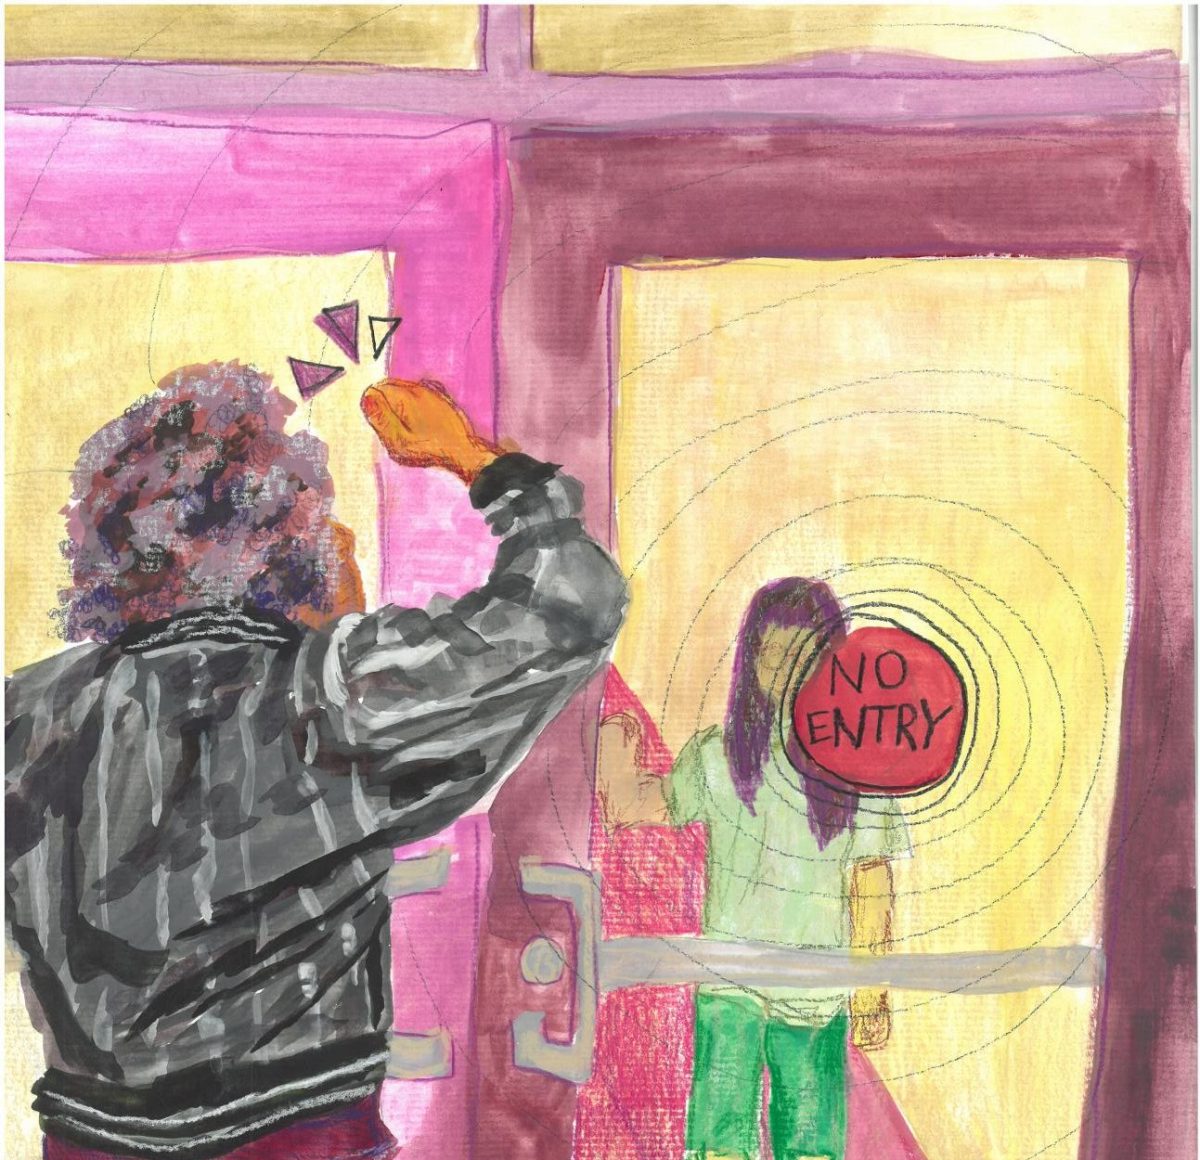 Students often struggle to get into the building on time. 
Illustration by Neva Livingston.